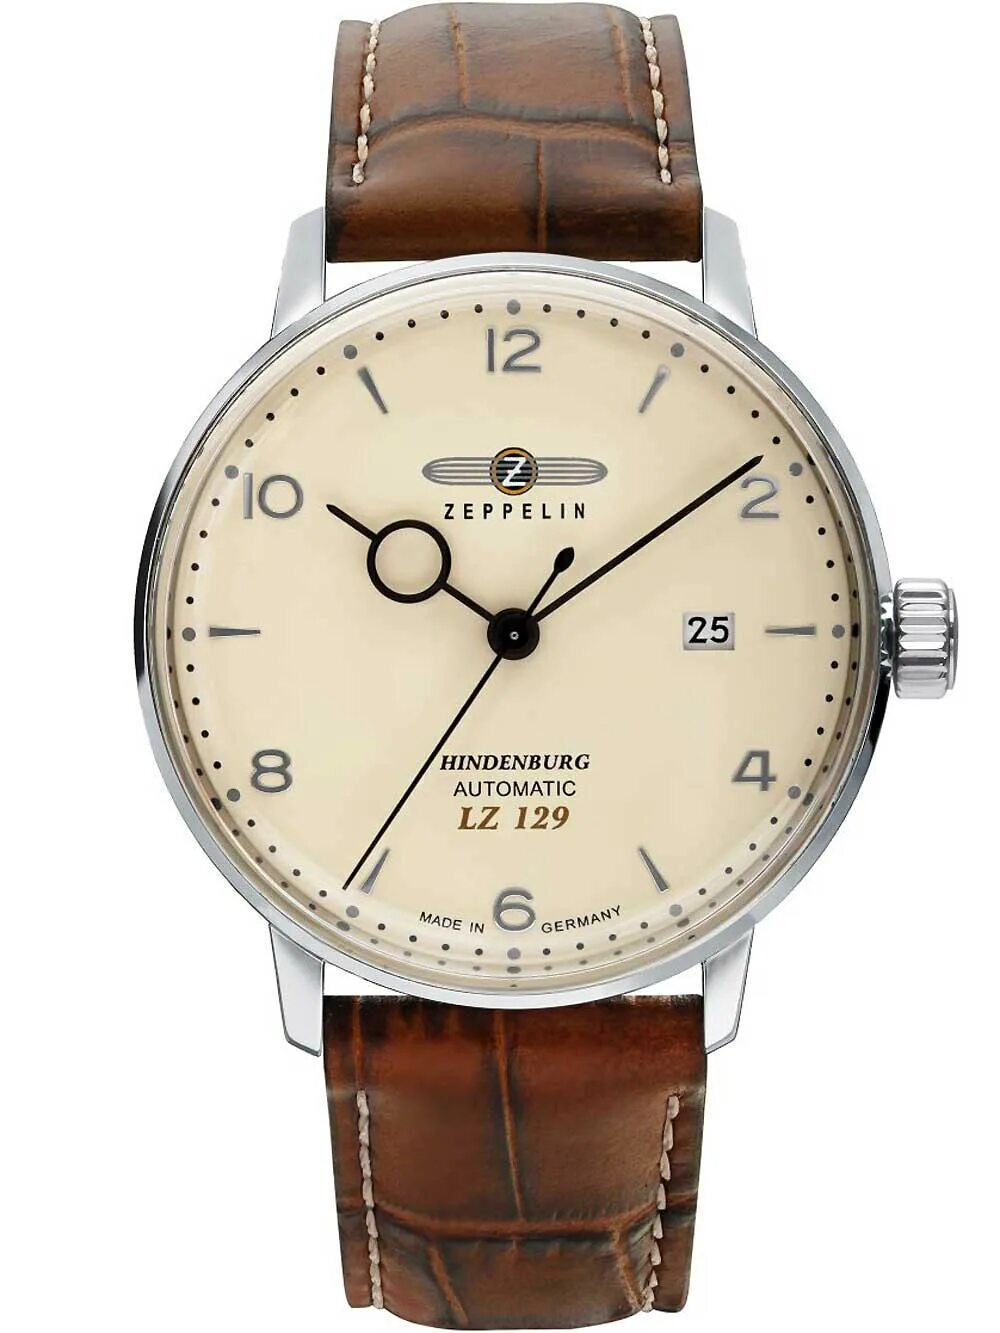 Часы Zeppelin LZ 129. Zeppelin lz129 Hindenburg часы. Наручные часы Zeppelin Zep-80425. Часы мужские Zeppelin LZ 129. Мужские часы zeppelin